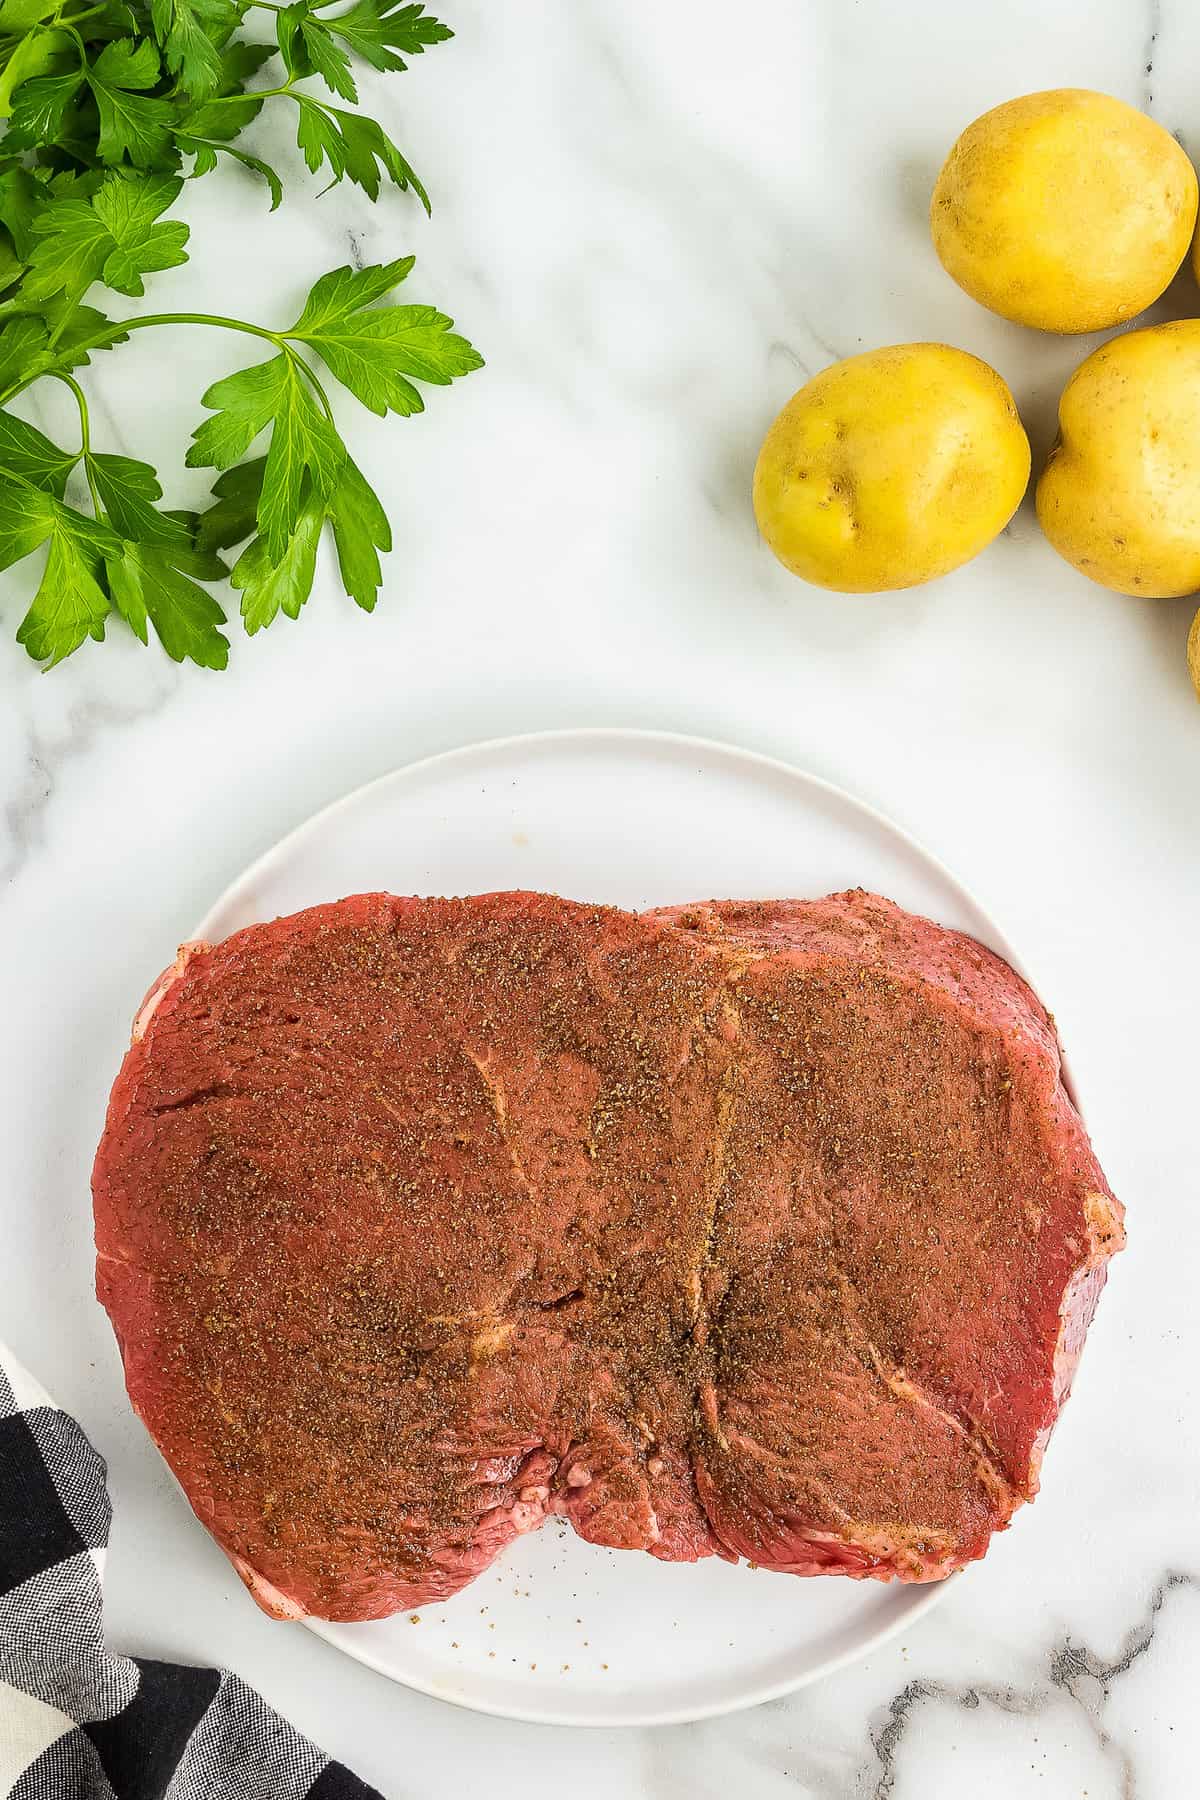 Sirloin steak with beef rub on it